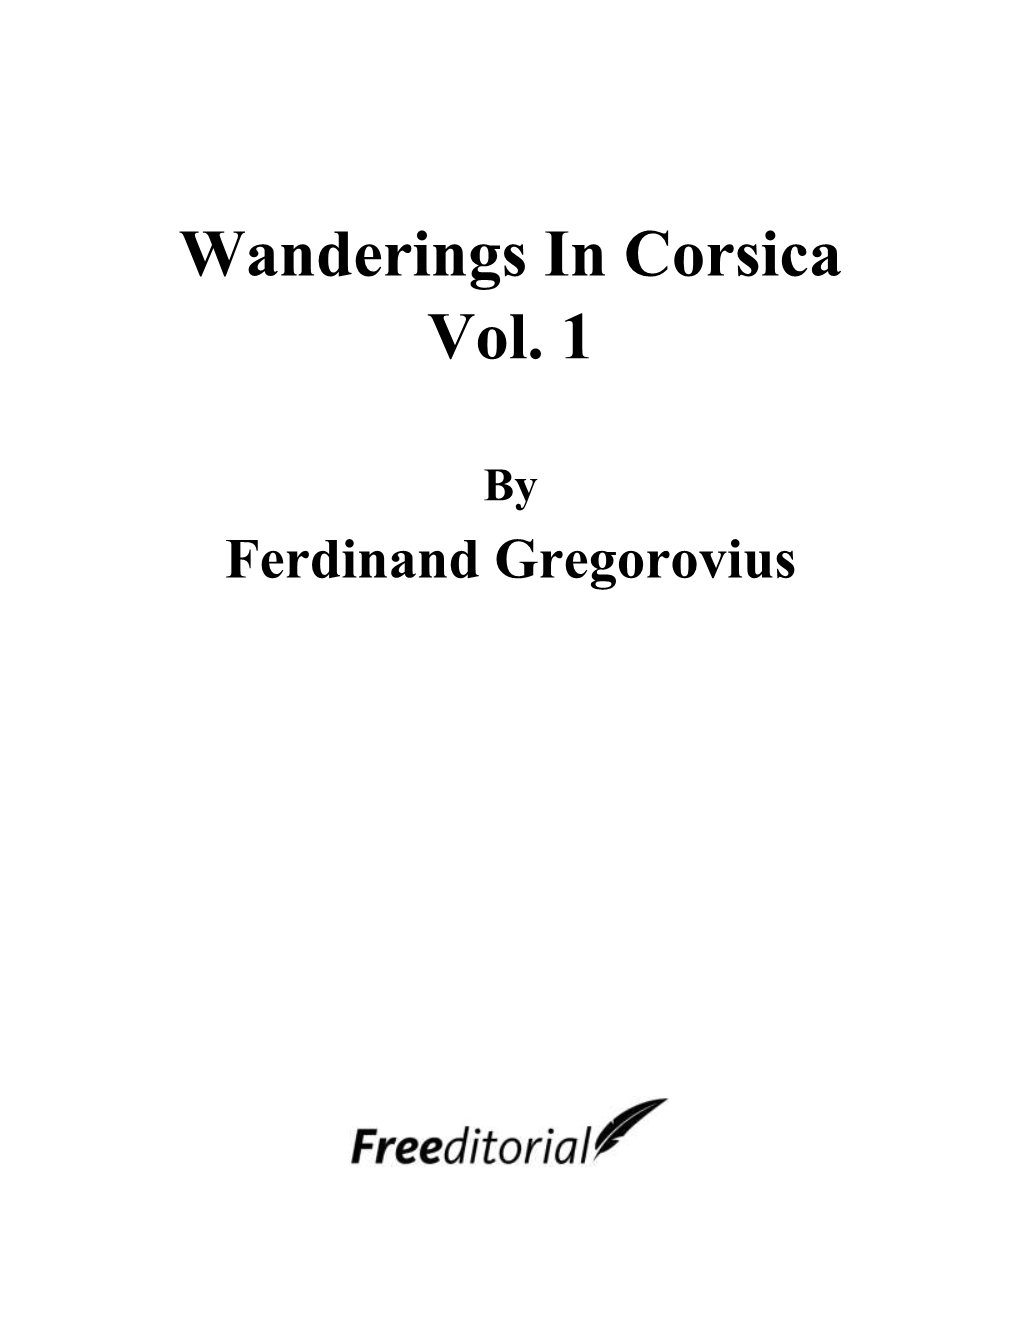 Wanderings in Corsica Vol. 1